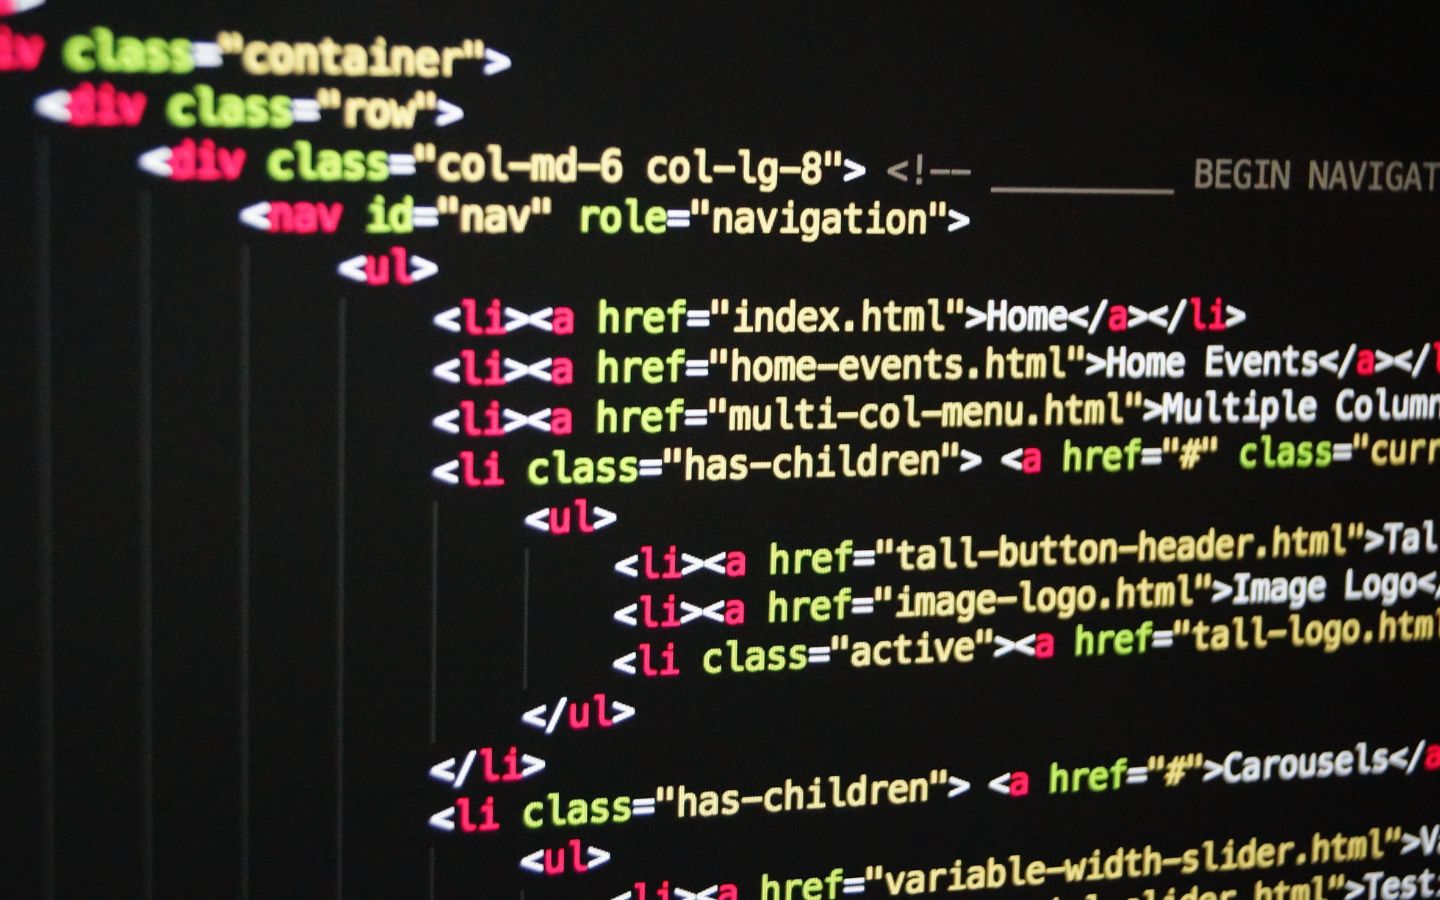 sample image of html coding